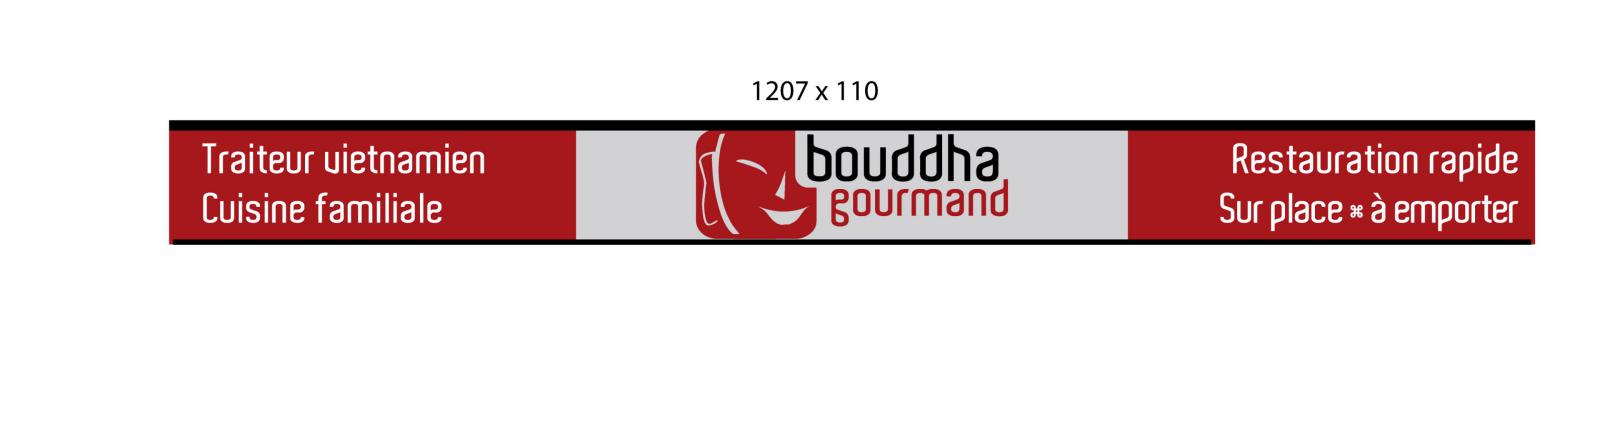 Bouddha Gourmand ,  restauration - enseignes, panneautage